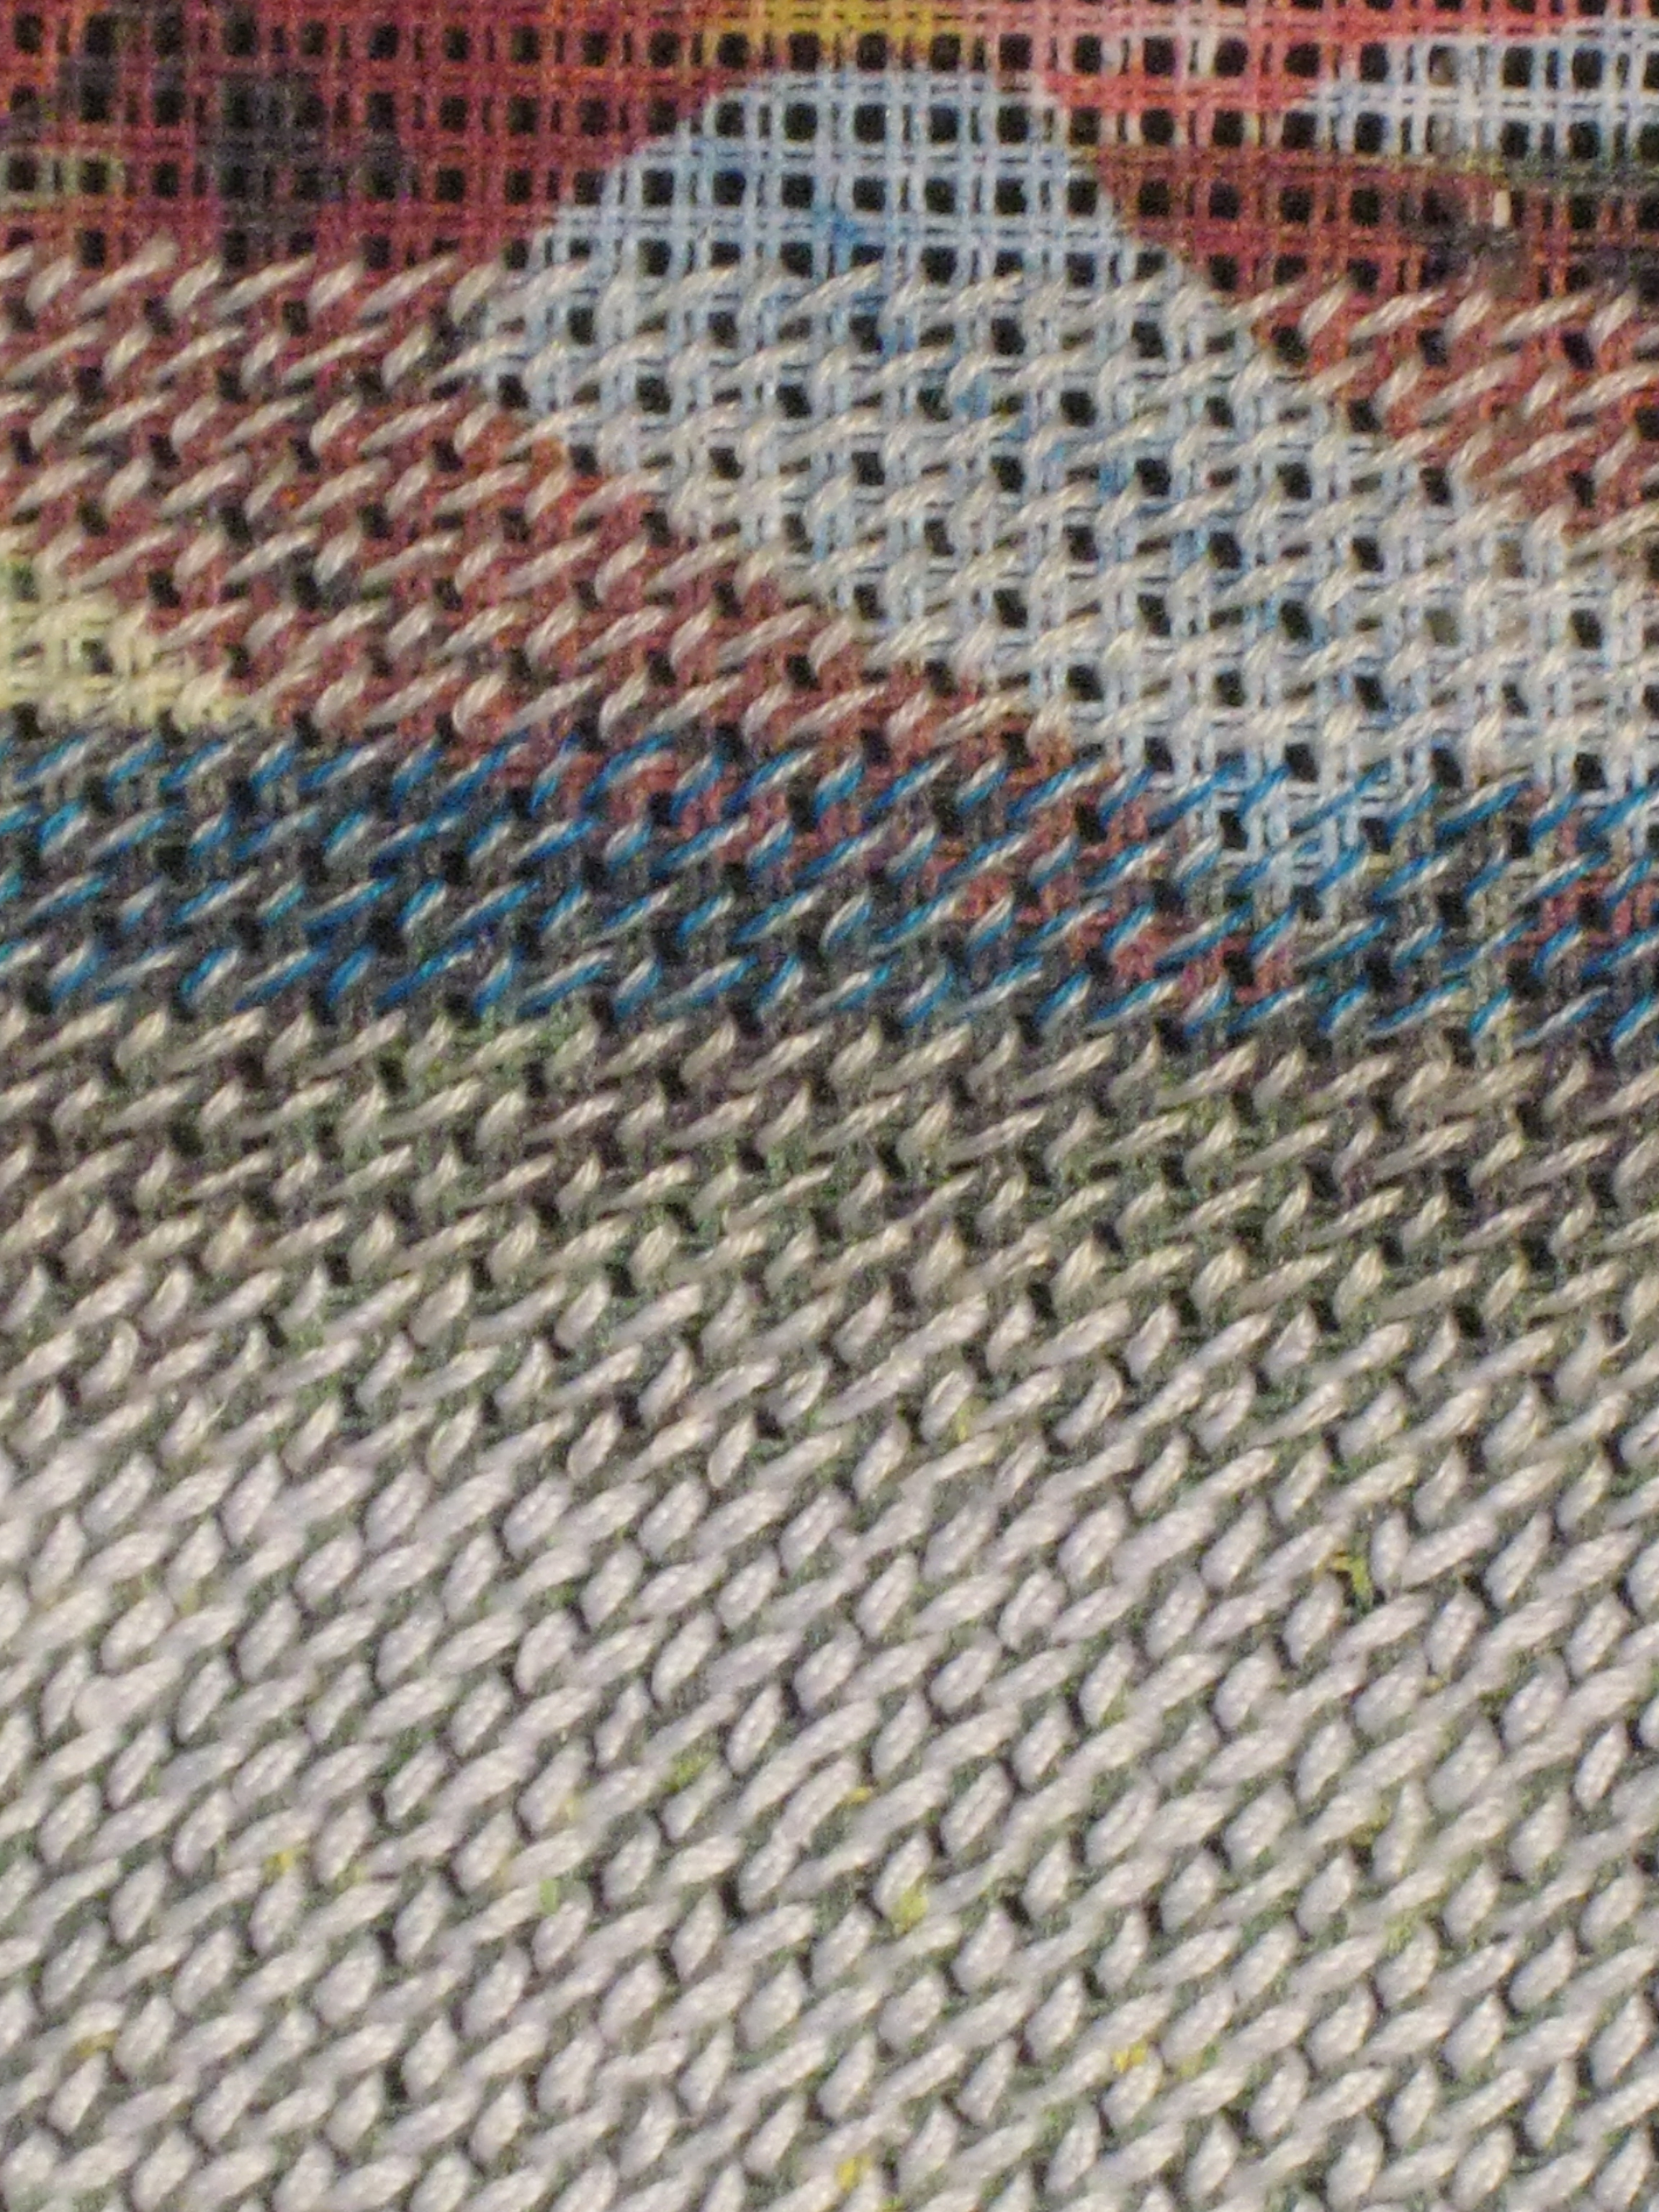 Eveline Kotai - Stitch detail, 2013, wool on painted canvas